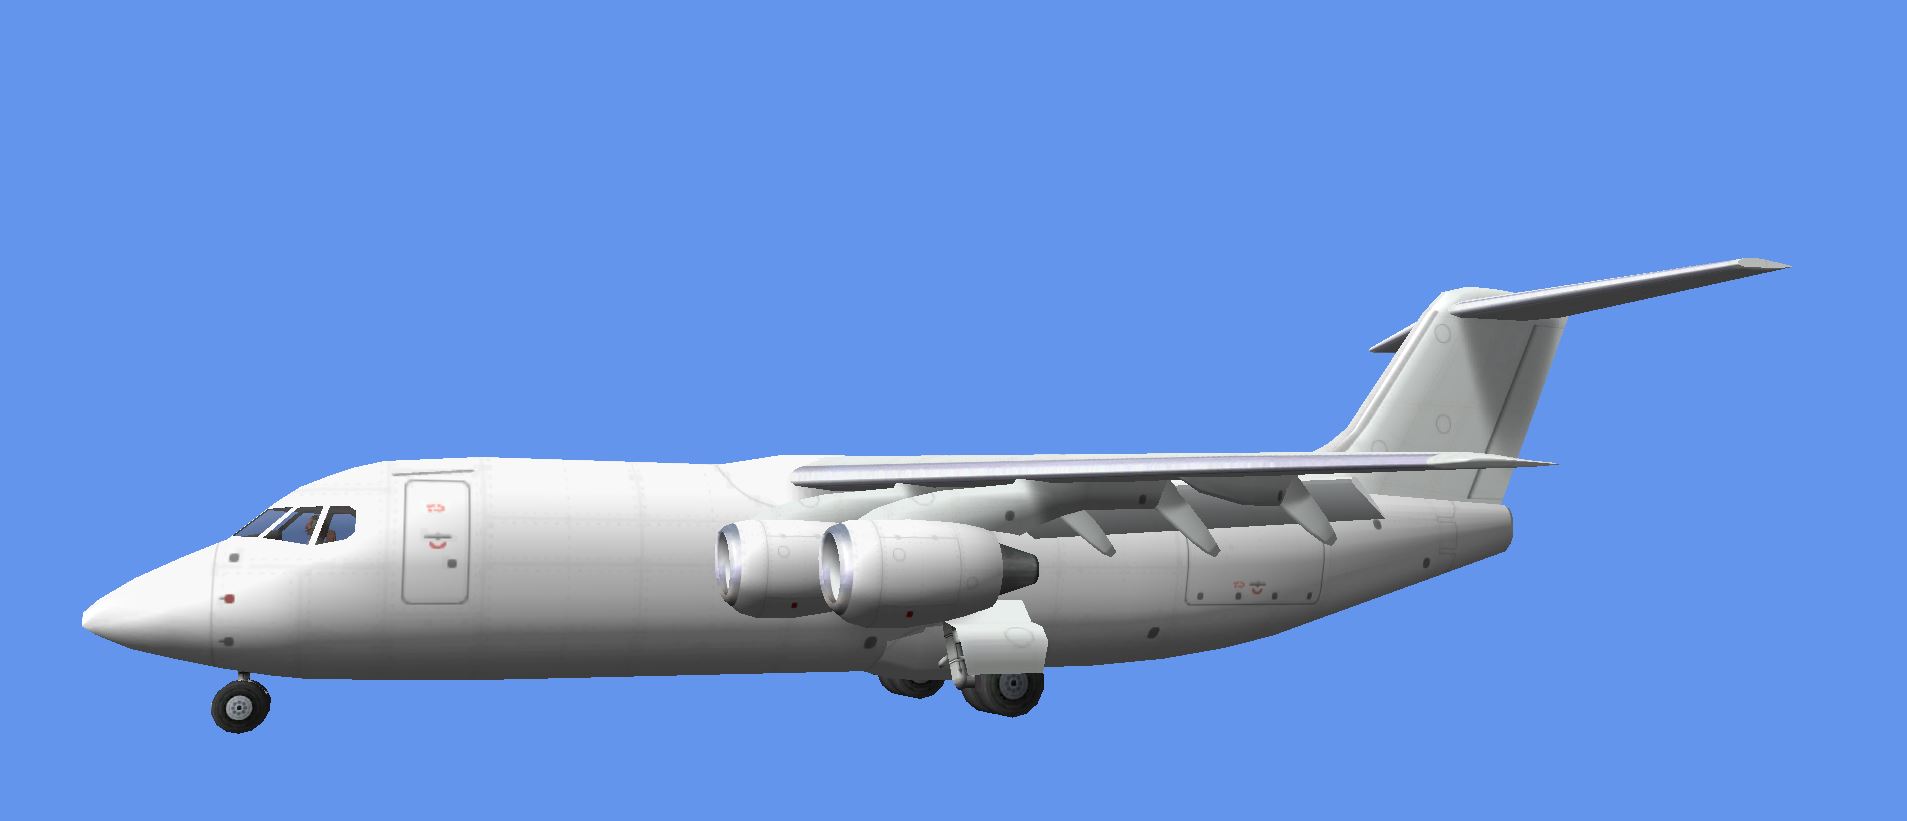 bae146-cargo-g-579cc08.jpg